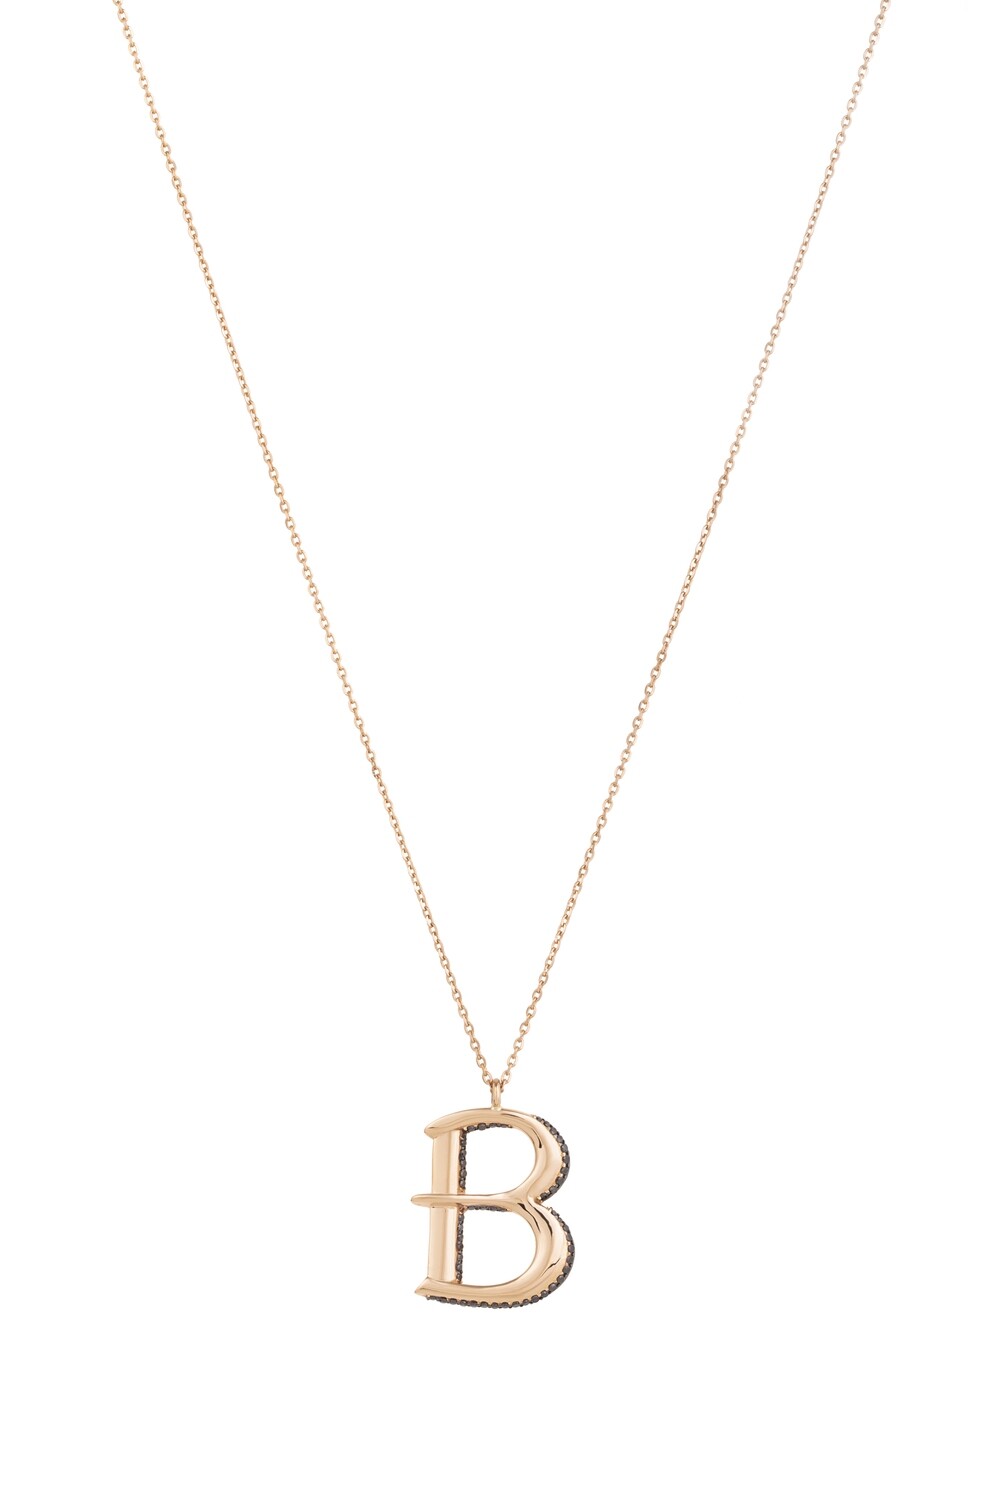 Initials Fancy Black Diamond Necklace, B